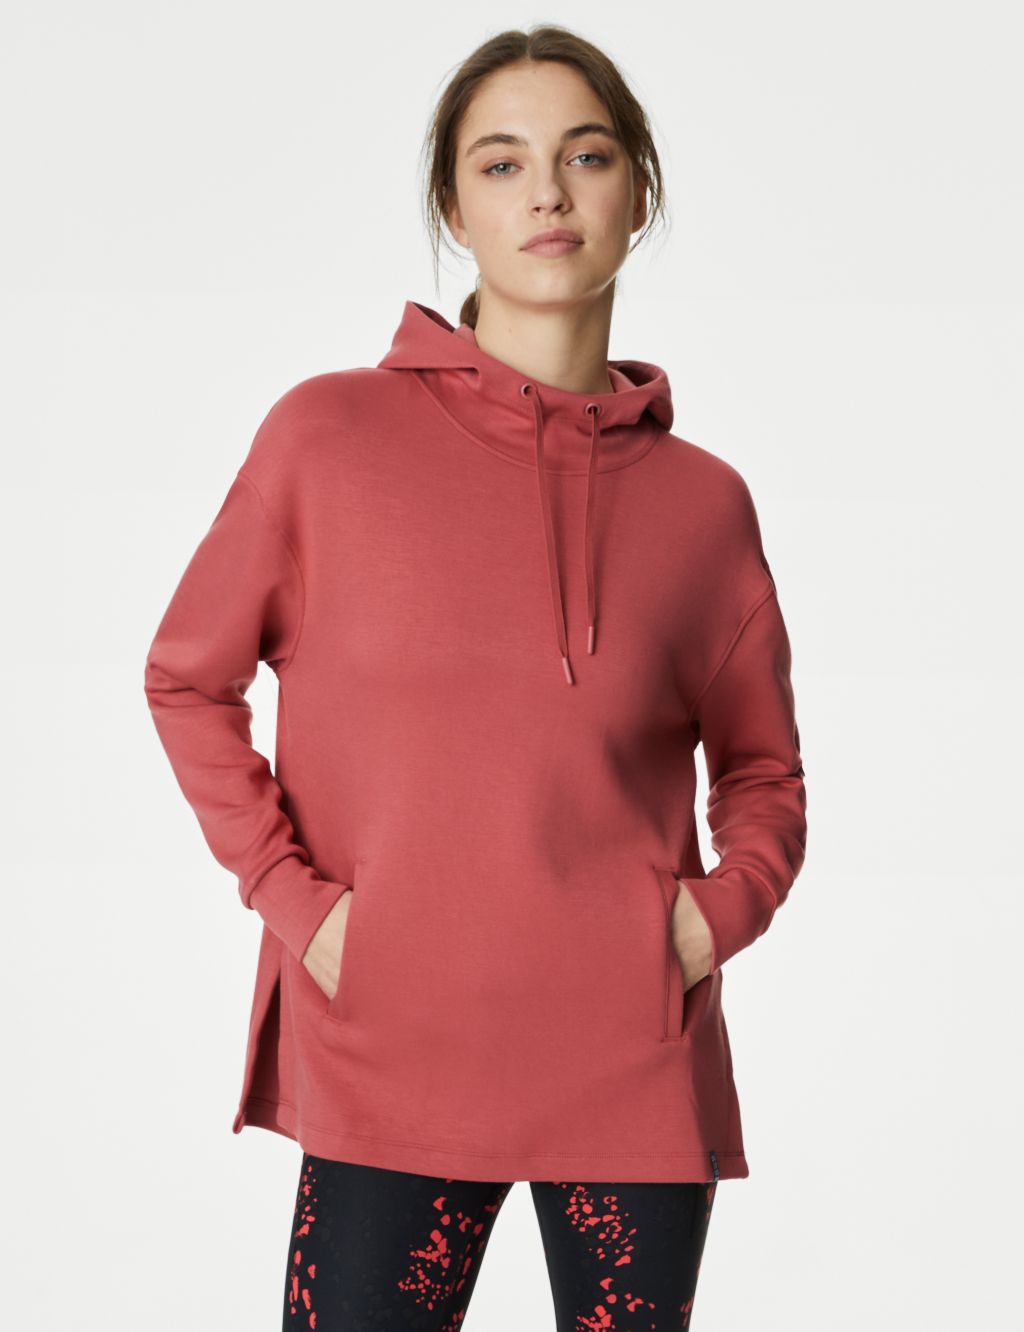 Women's Sports Hoodies & Sweatshirts